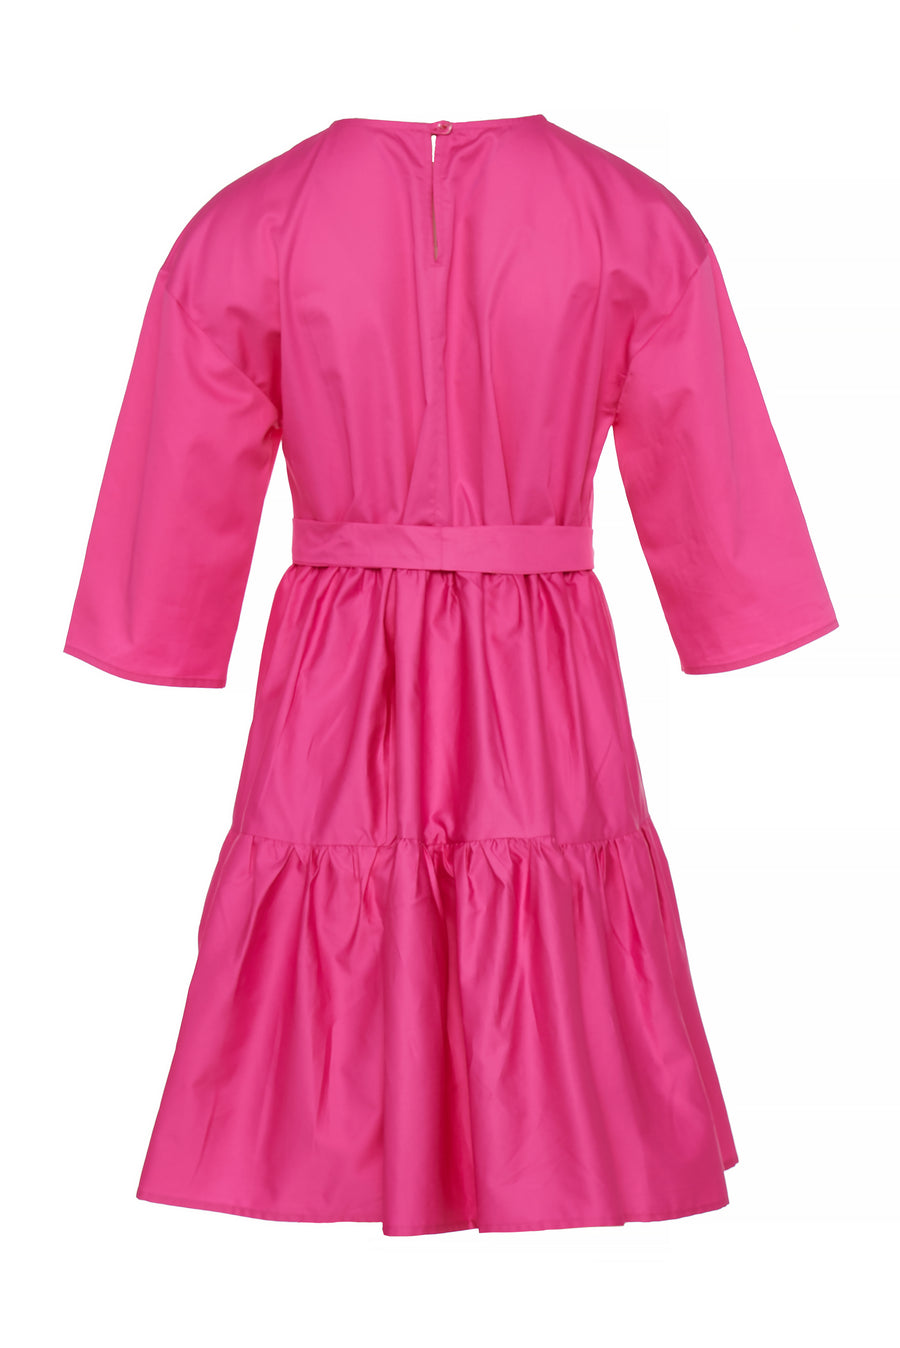 NMW Clementine Dress (Pink)